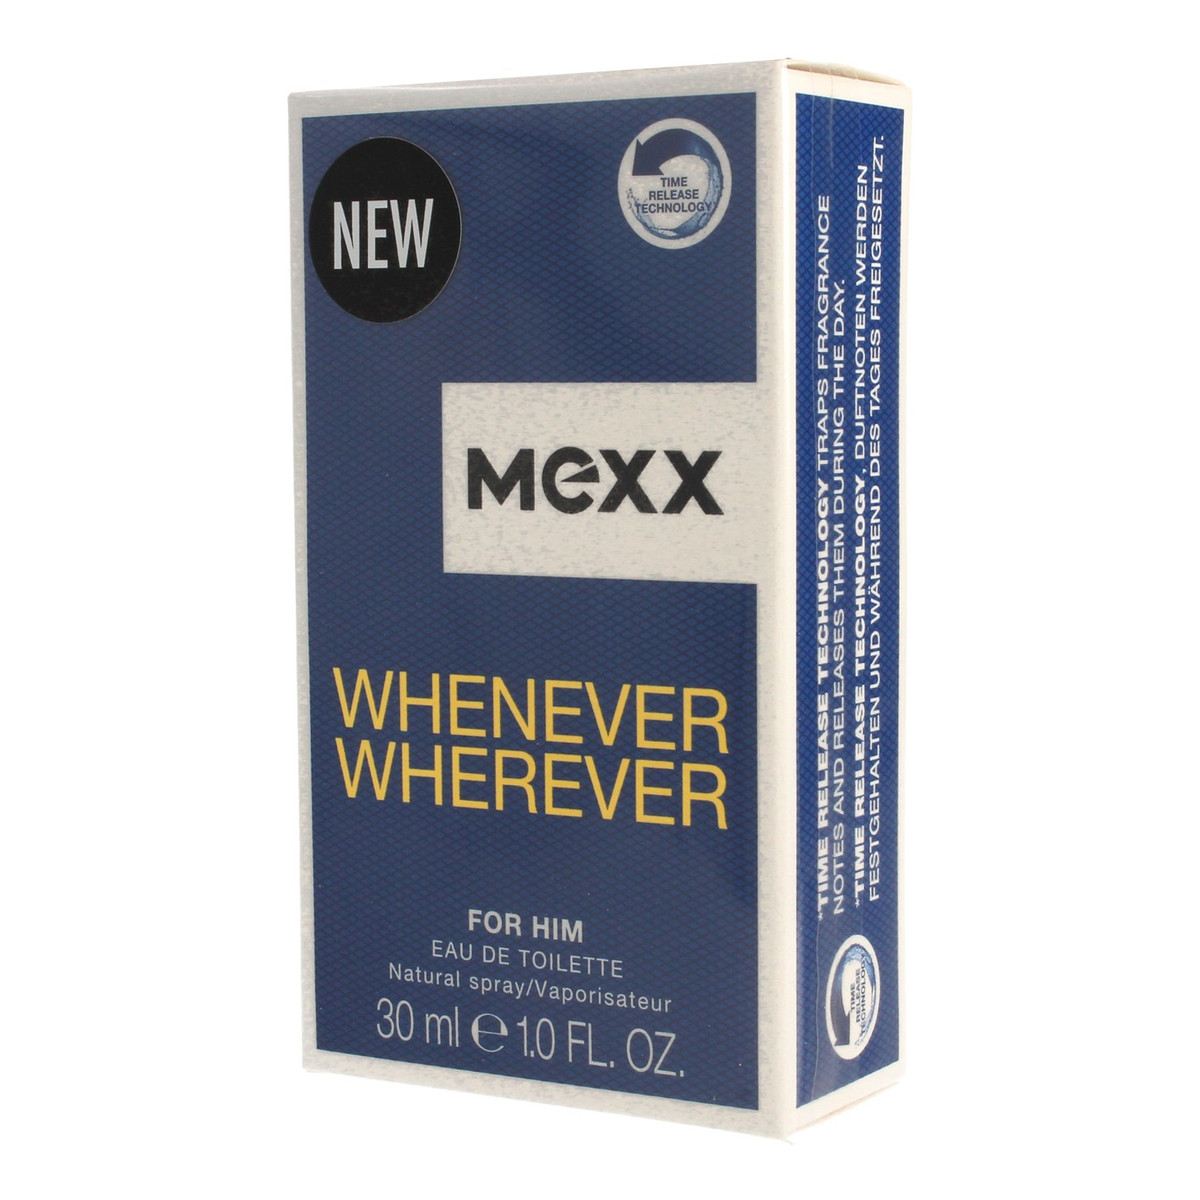 Mexx Whenever Wherever for Him Woda toaletowa 30ml